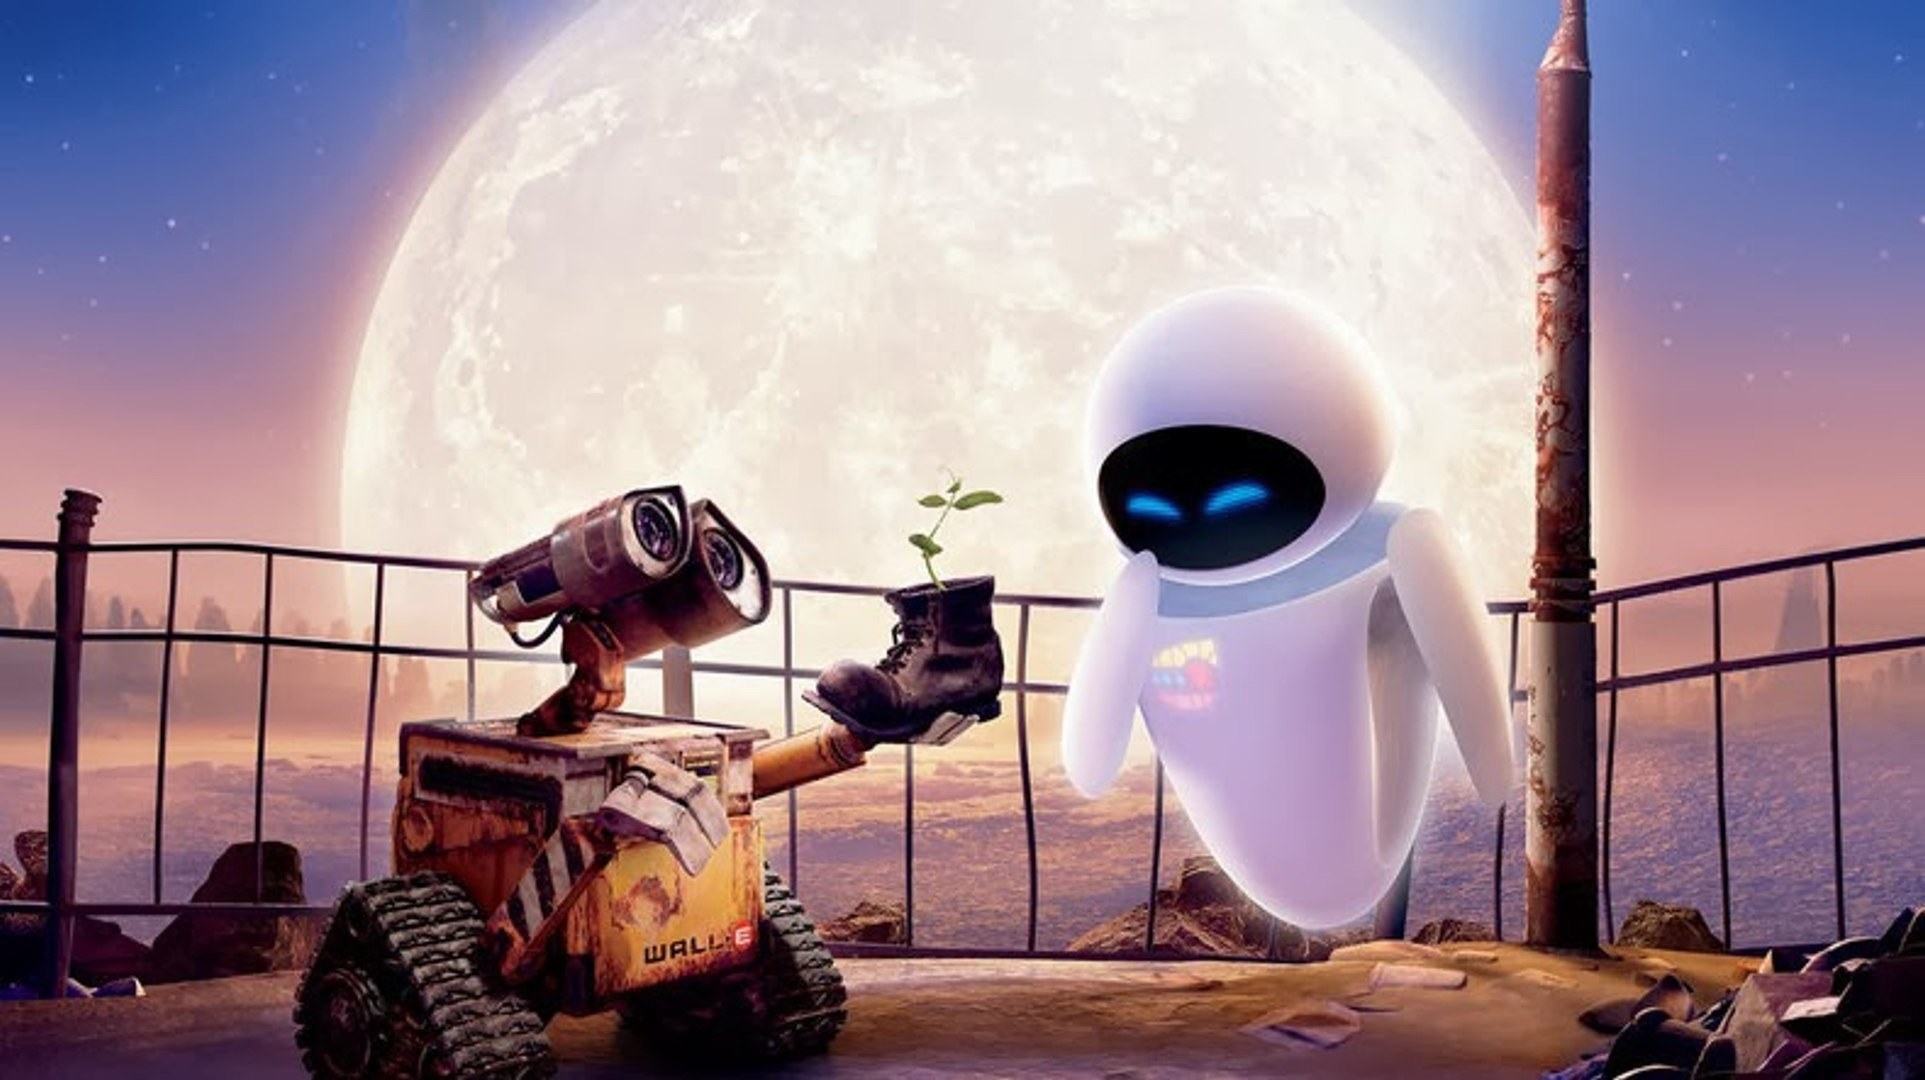 Eve and WALL-E